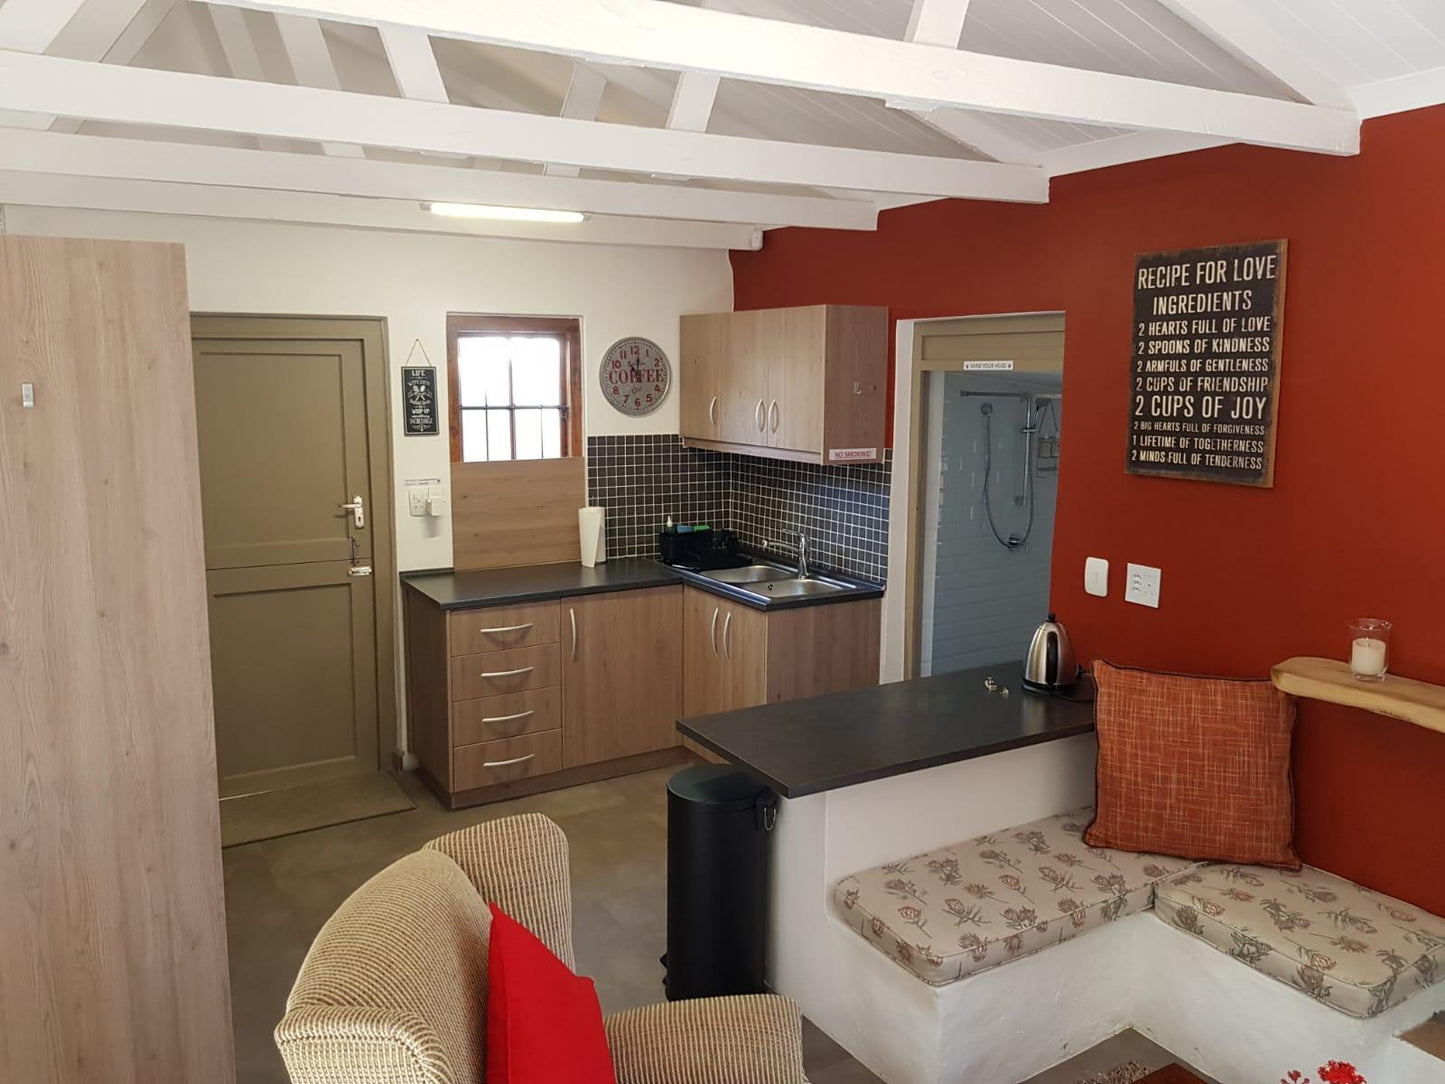 Protea Cottage @ Karibu Self-Catering Accommodation